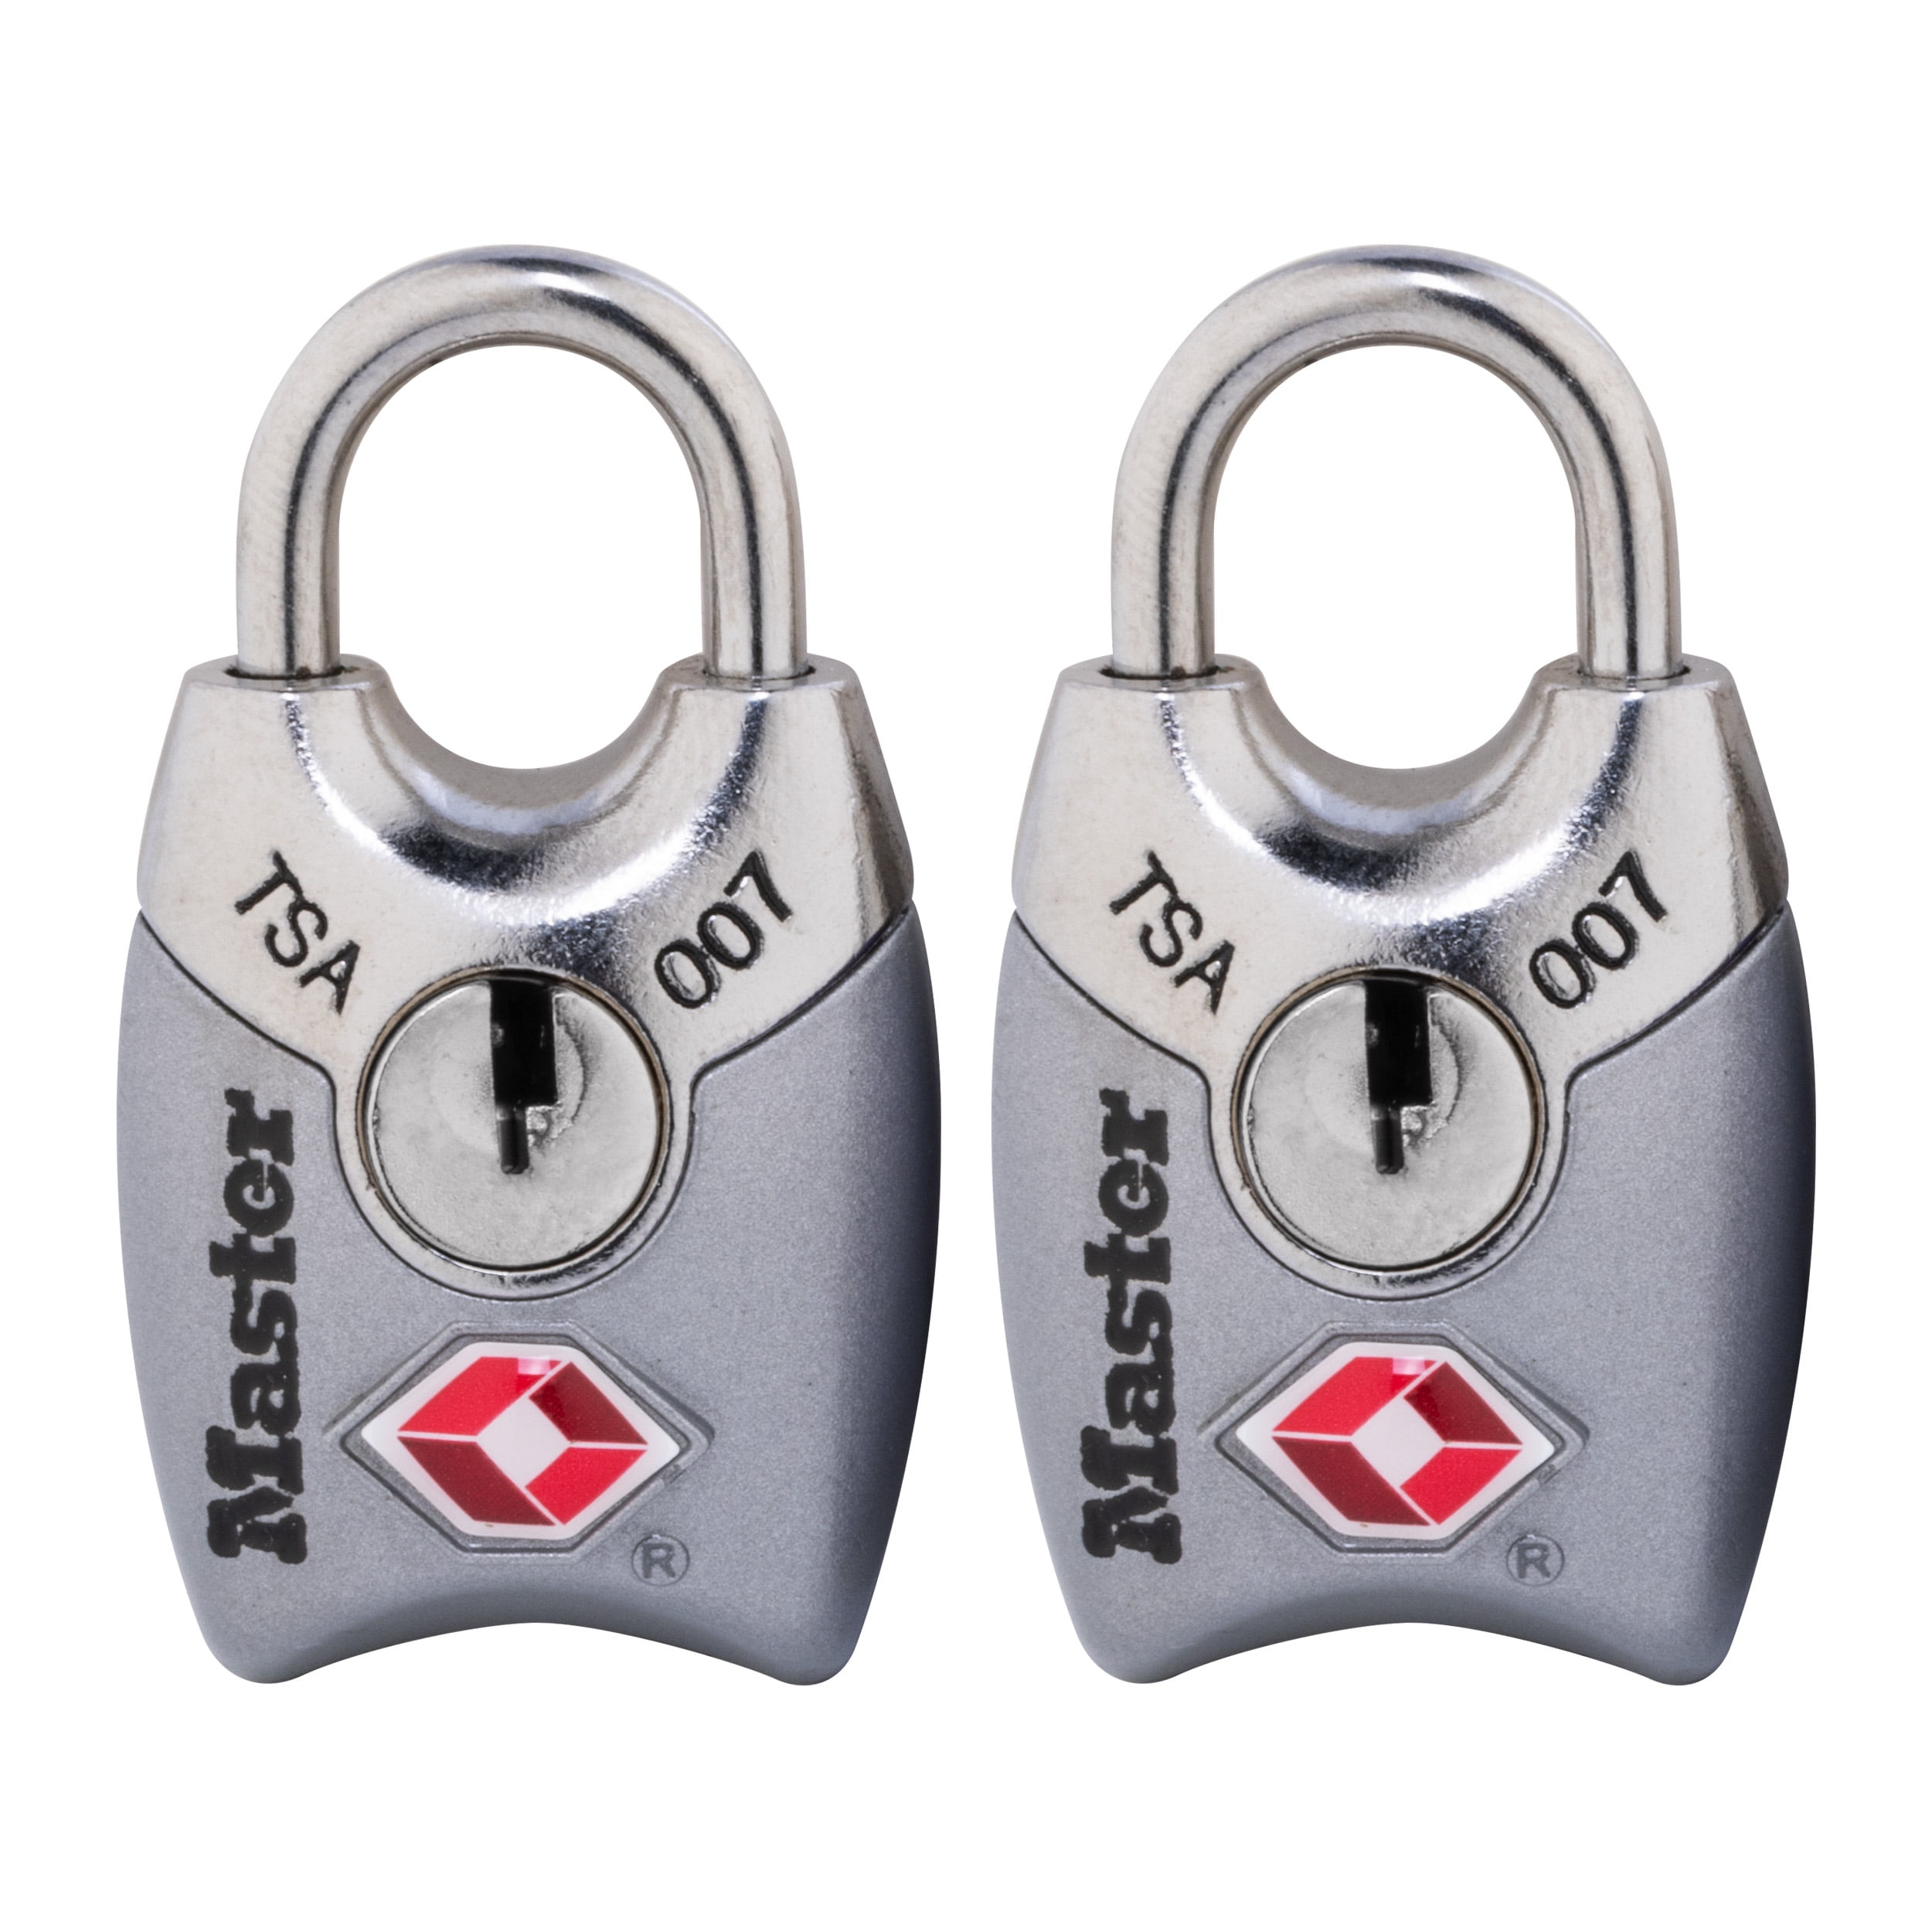 Master Lock Metal 25 mm (1 in) TSA Approved Keyed Lock, 14 mm (9/16 in)  shackle, 2 pack